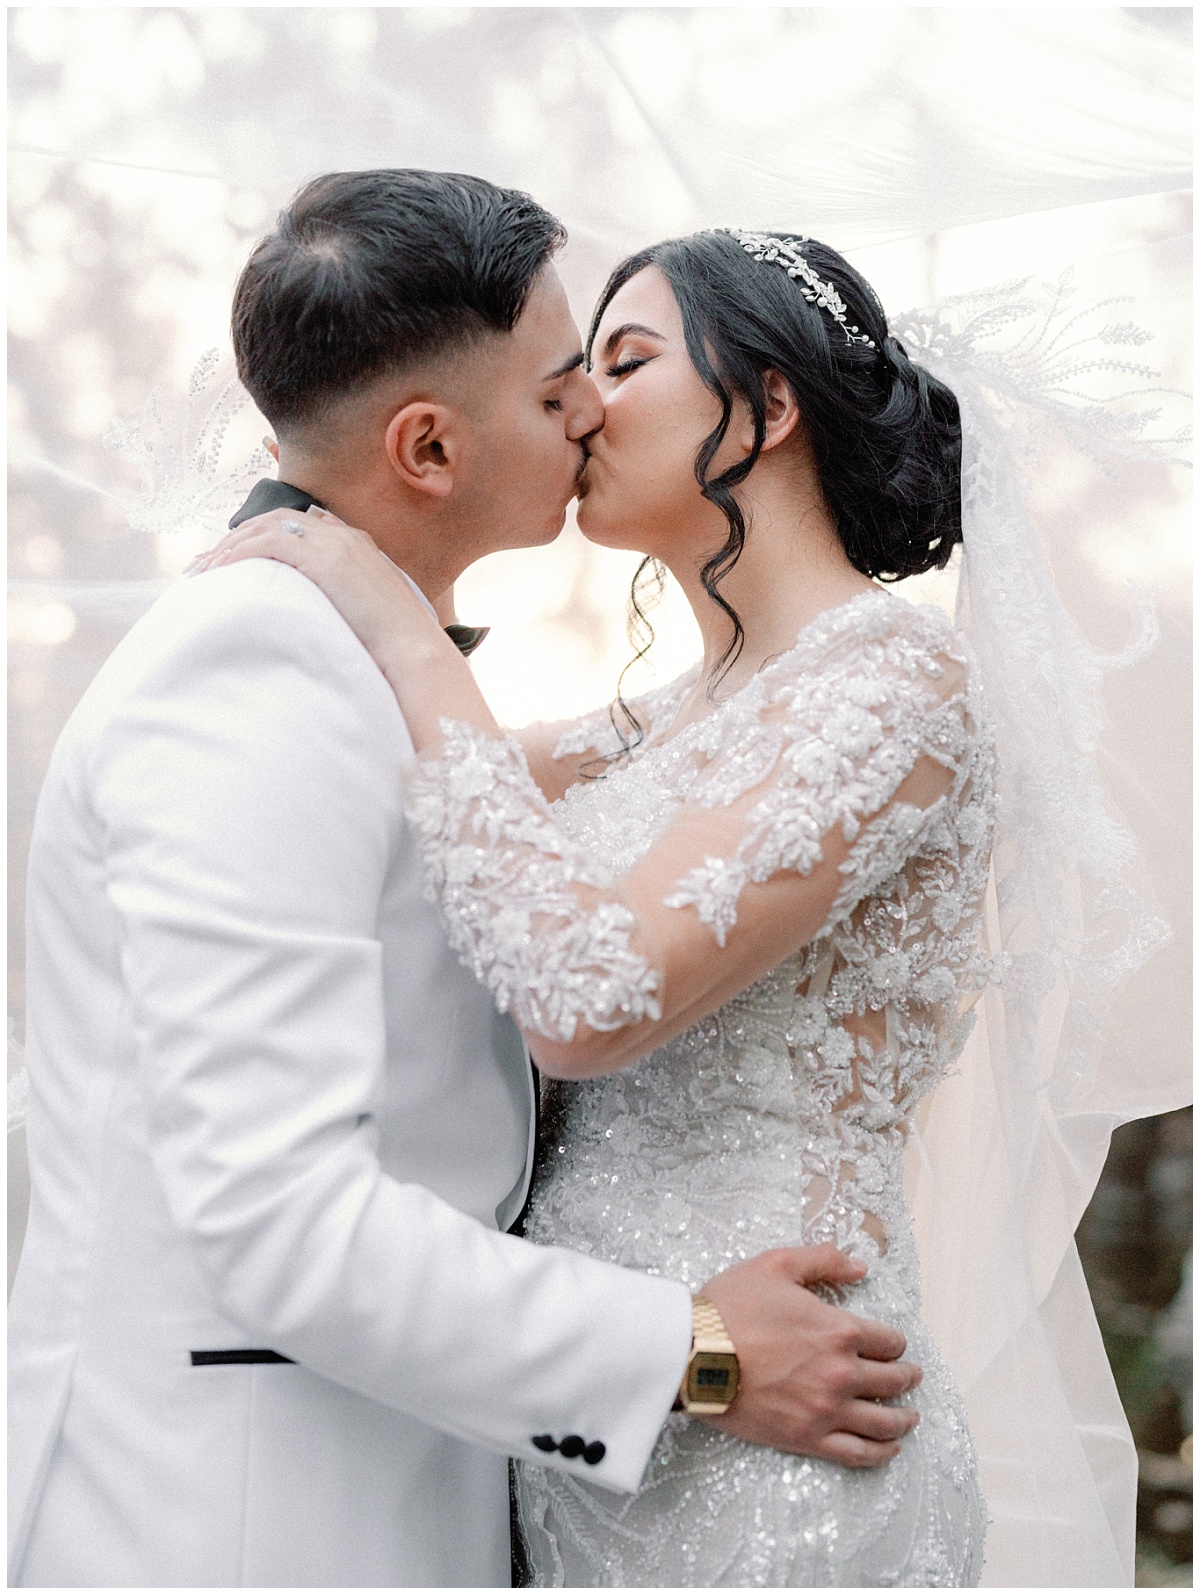 Under a Wedding Veil for an Intimate Kiss